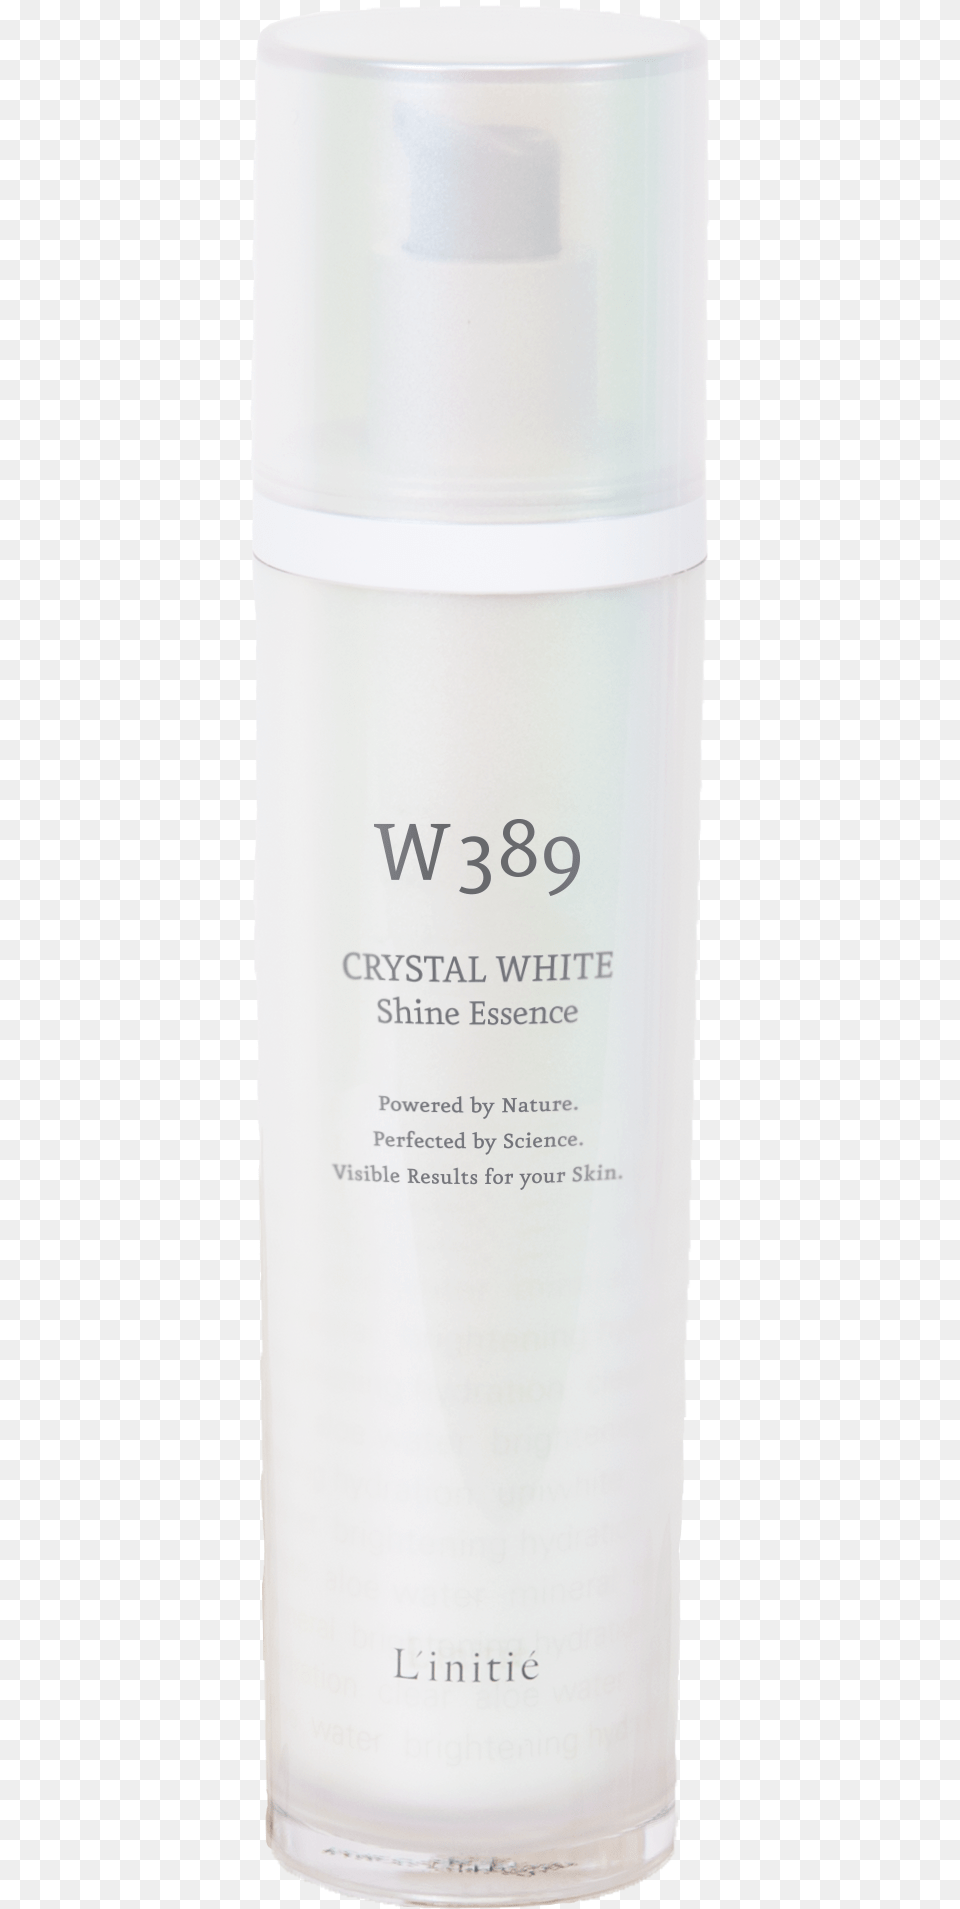 Crystal White Shine Essence Serum Detox Drainant Lpg, Cosmetics, Bottle, Shaker, Deodorant Free Png